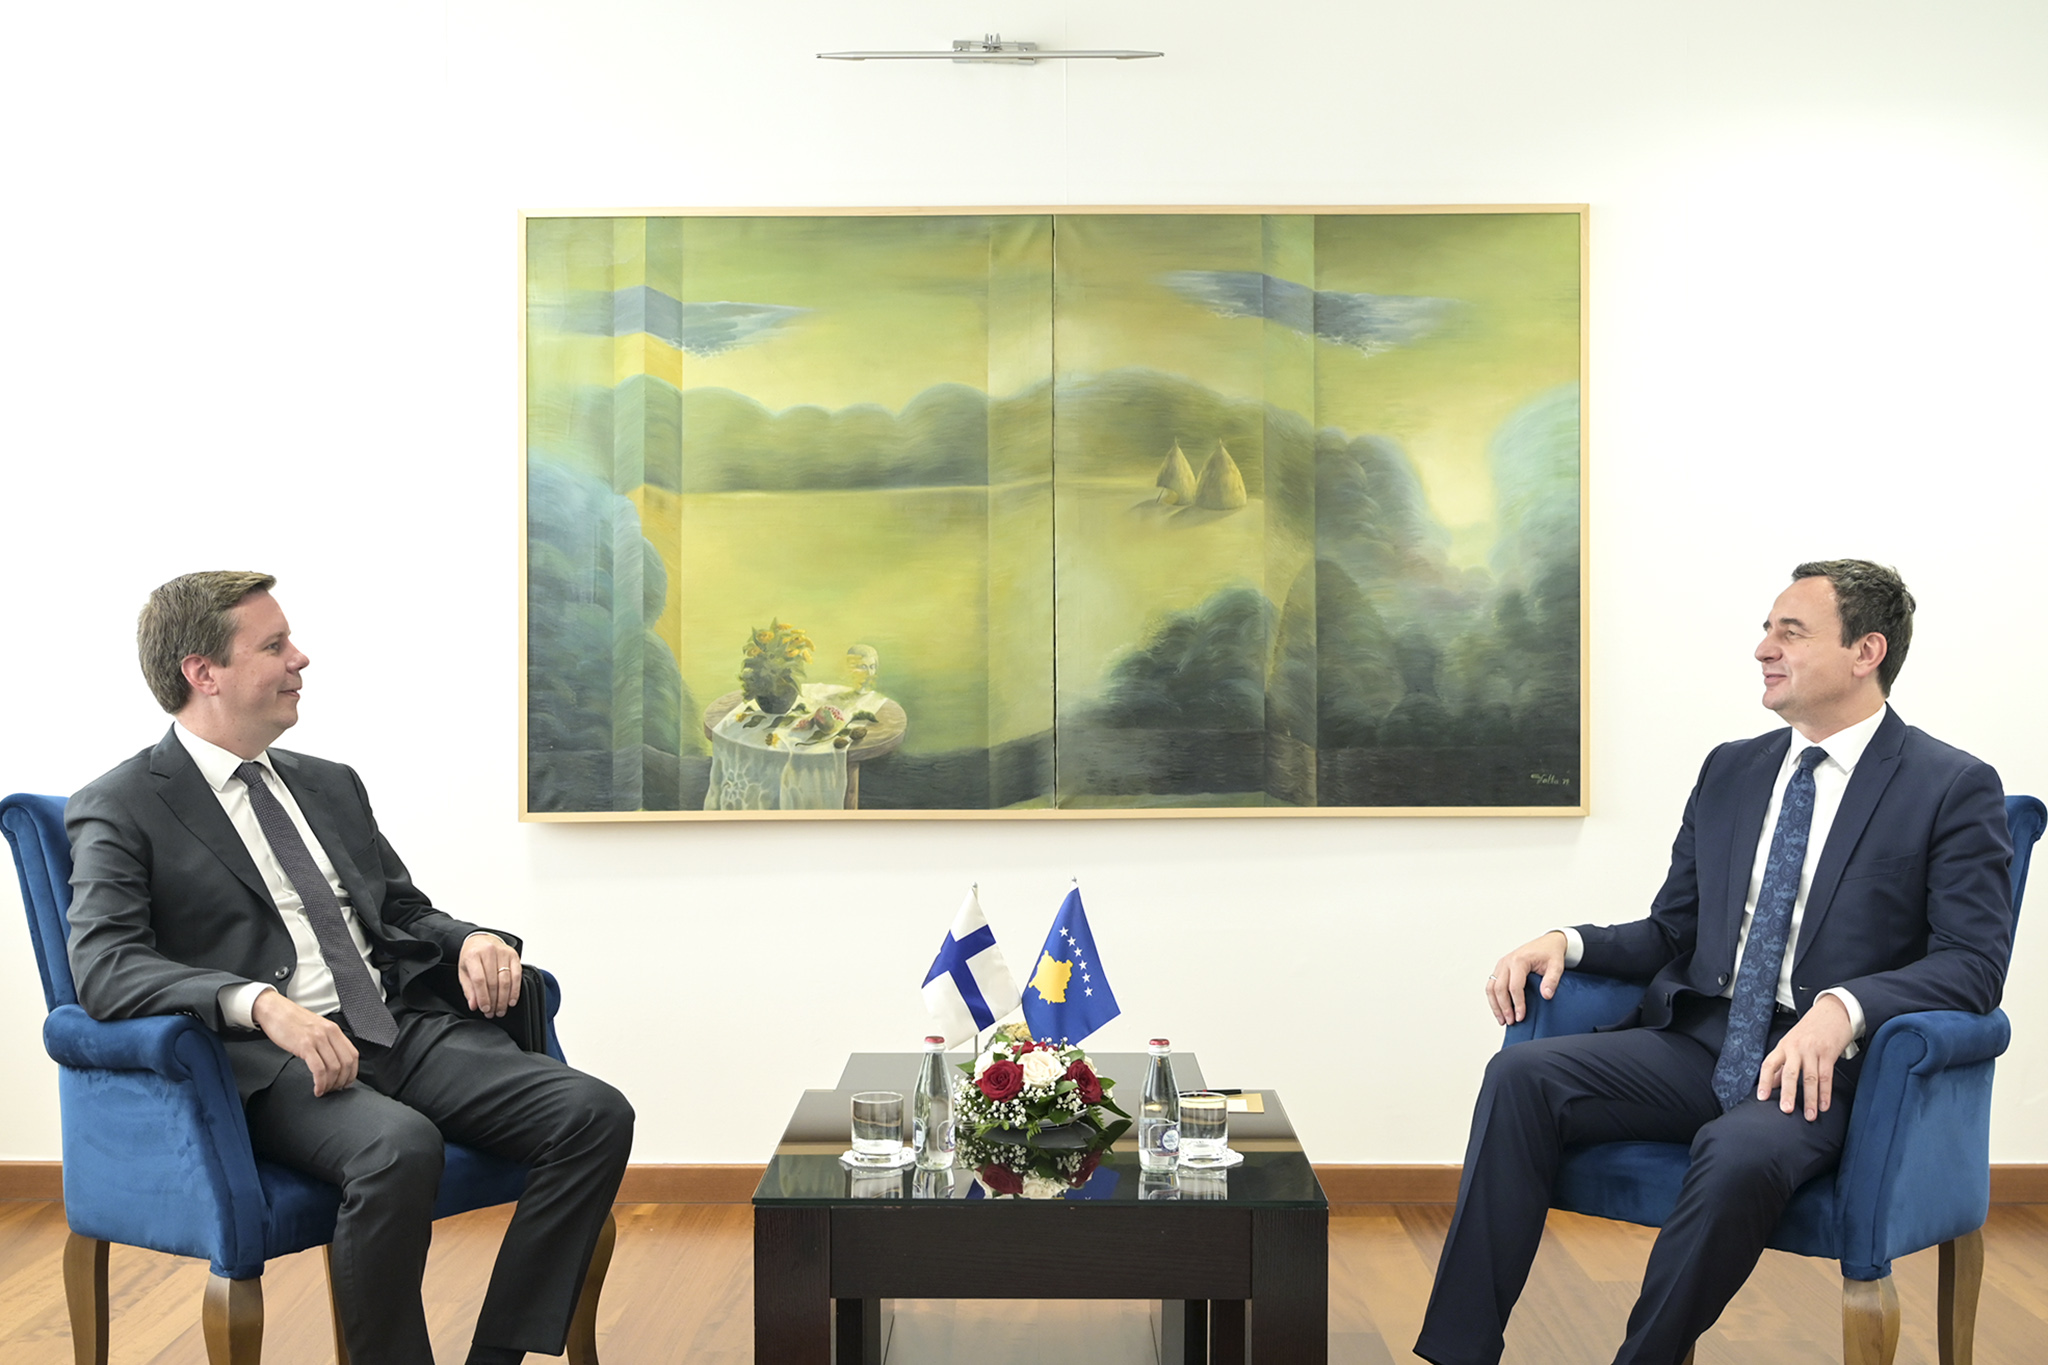 kryeministri-kurti-takoi-ambasadorin-e-finlandes,-u-diskutua-per-dialogun-kosove-serbi